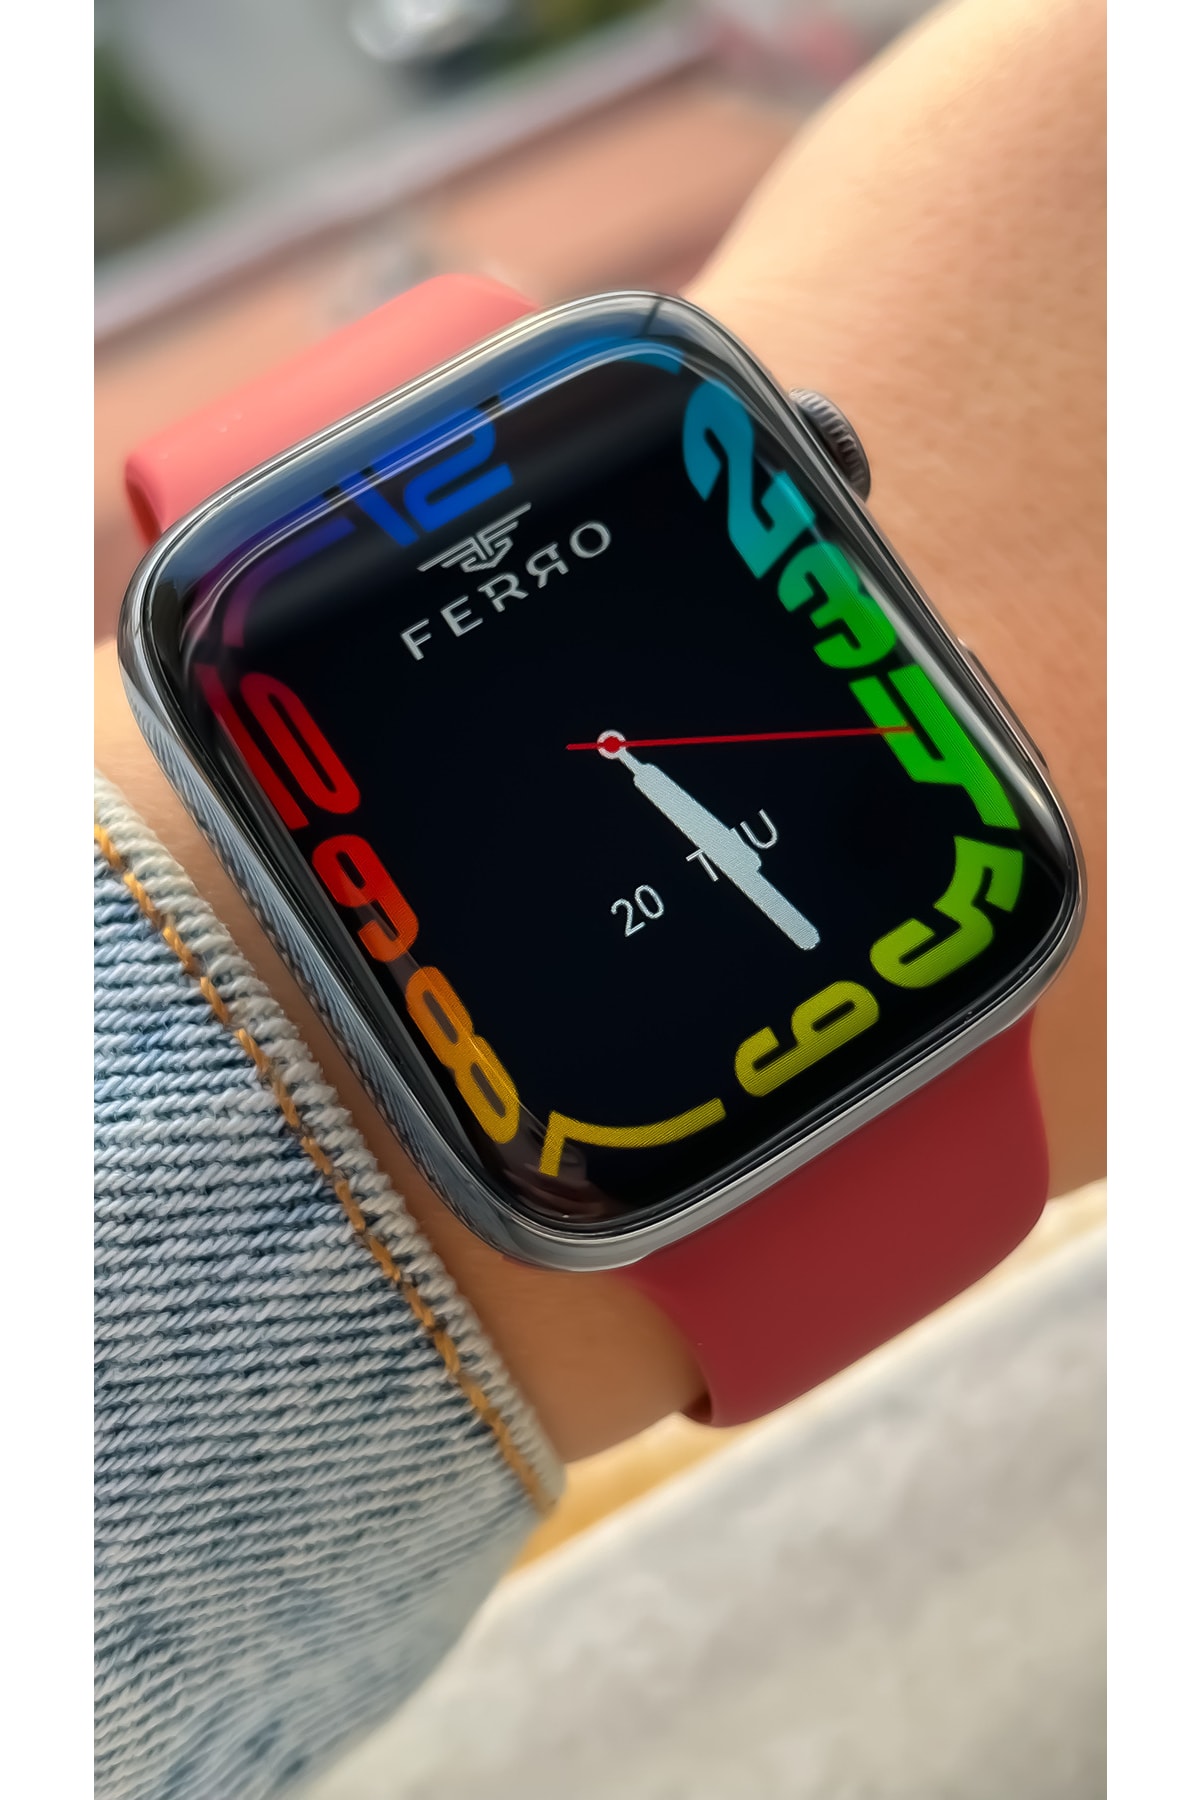 FERRO Kırmızı Silikon Kordon ,sesli Görüşme, Watch Vip Android Ve Ios Uyumlu Akıllı Saat